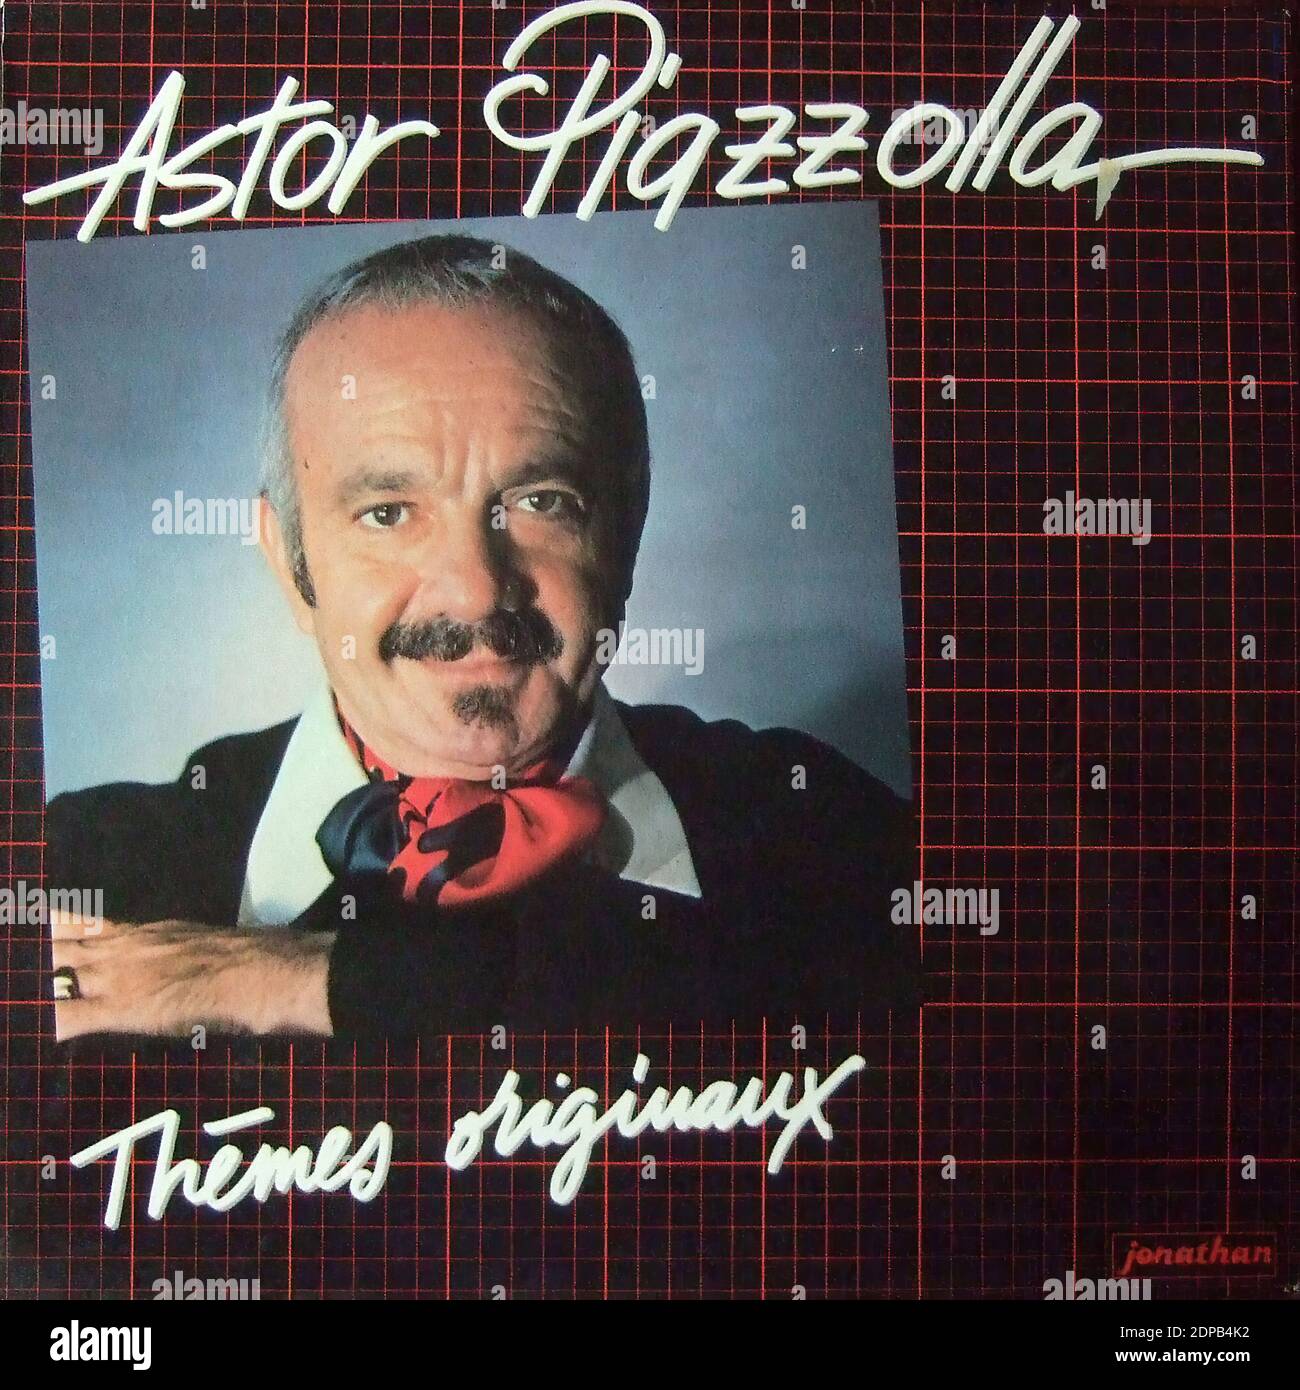 Astor Piazzolla - Themes originaux - Vintage Vinyl Album Cover Stockfoto